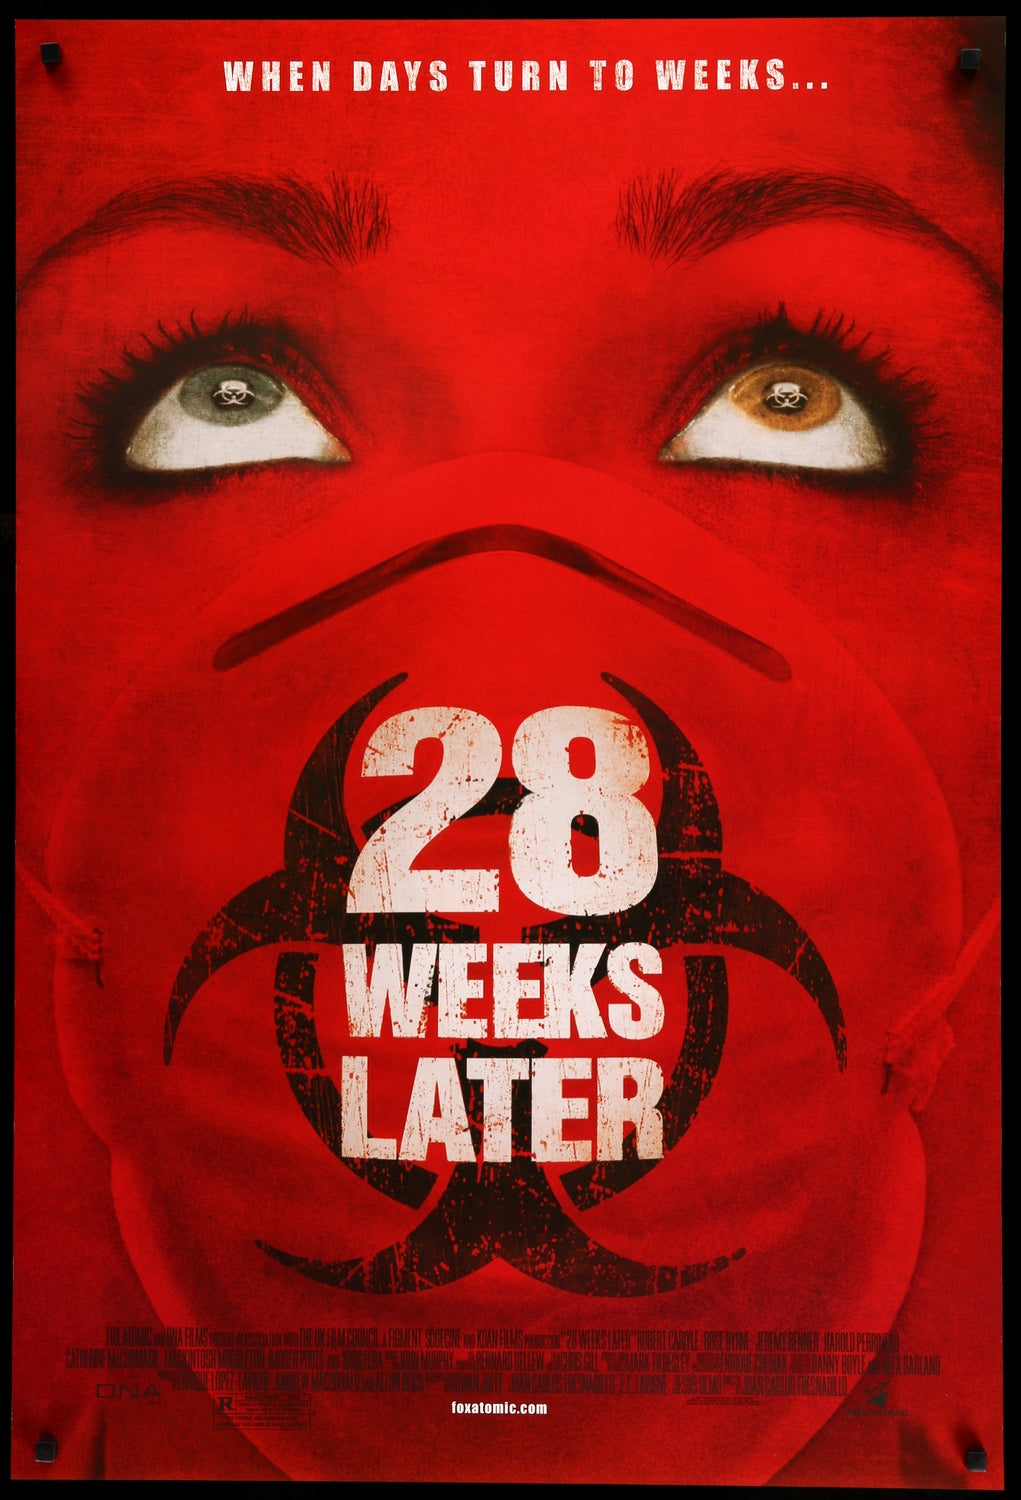 28 Weeks Later (2007) original movie poster for sale at Original Film Art